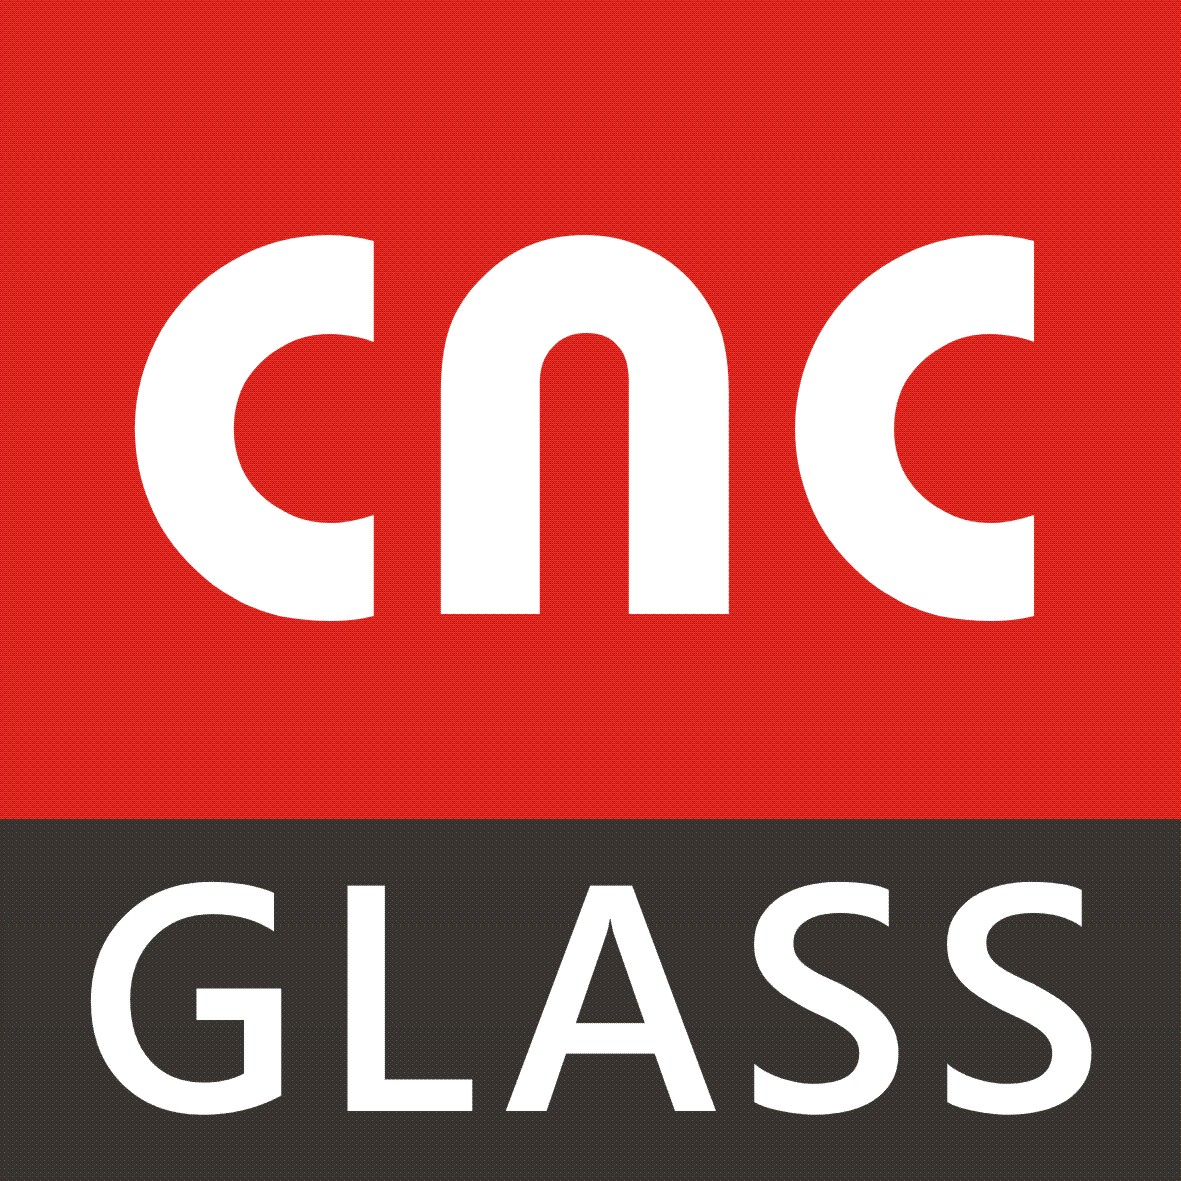 cnc-glass-interlayer